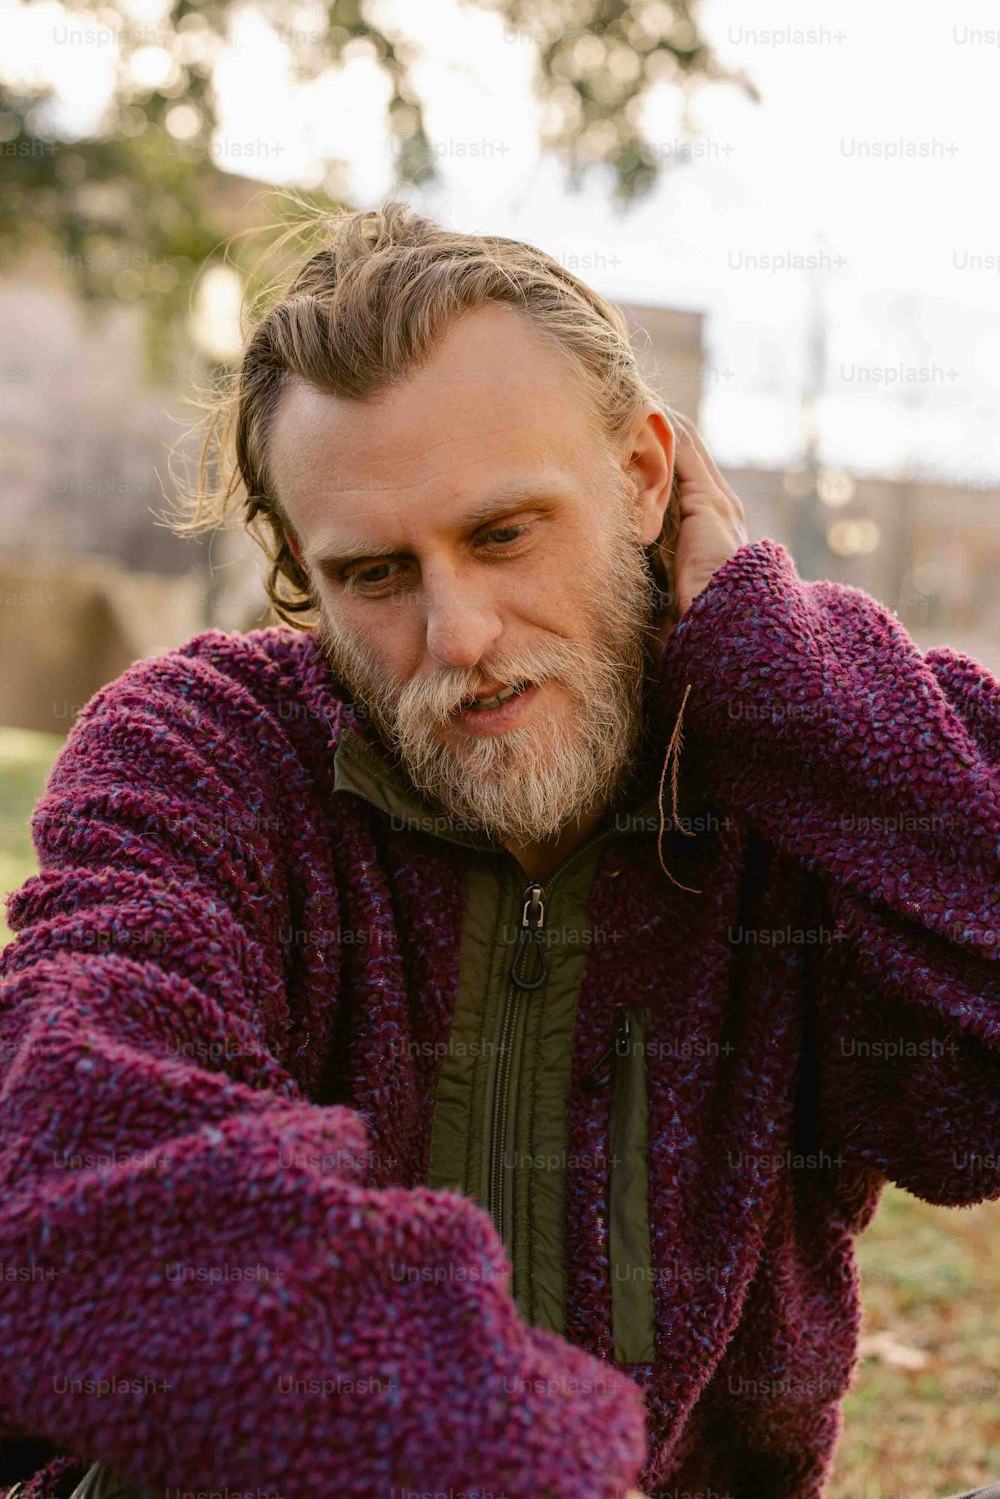 a man with a beard wearing a purple sweater